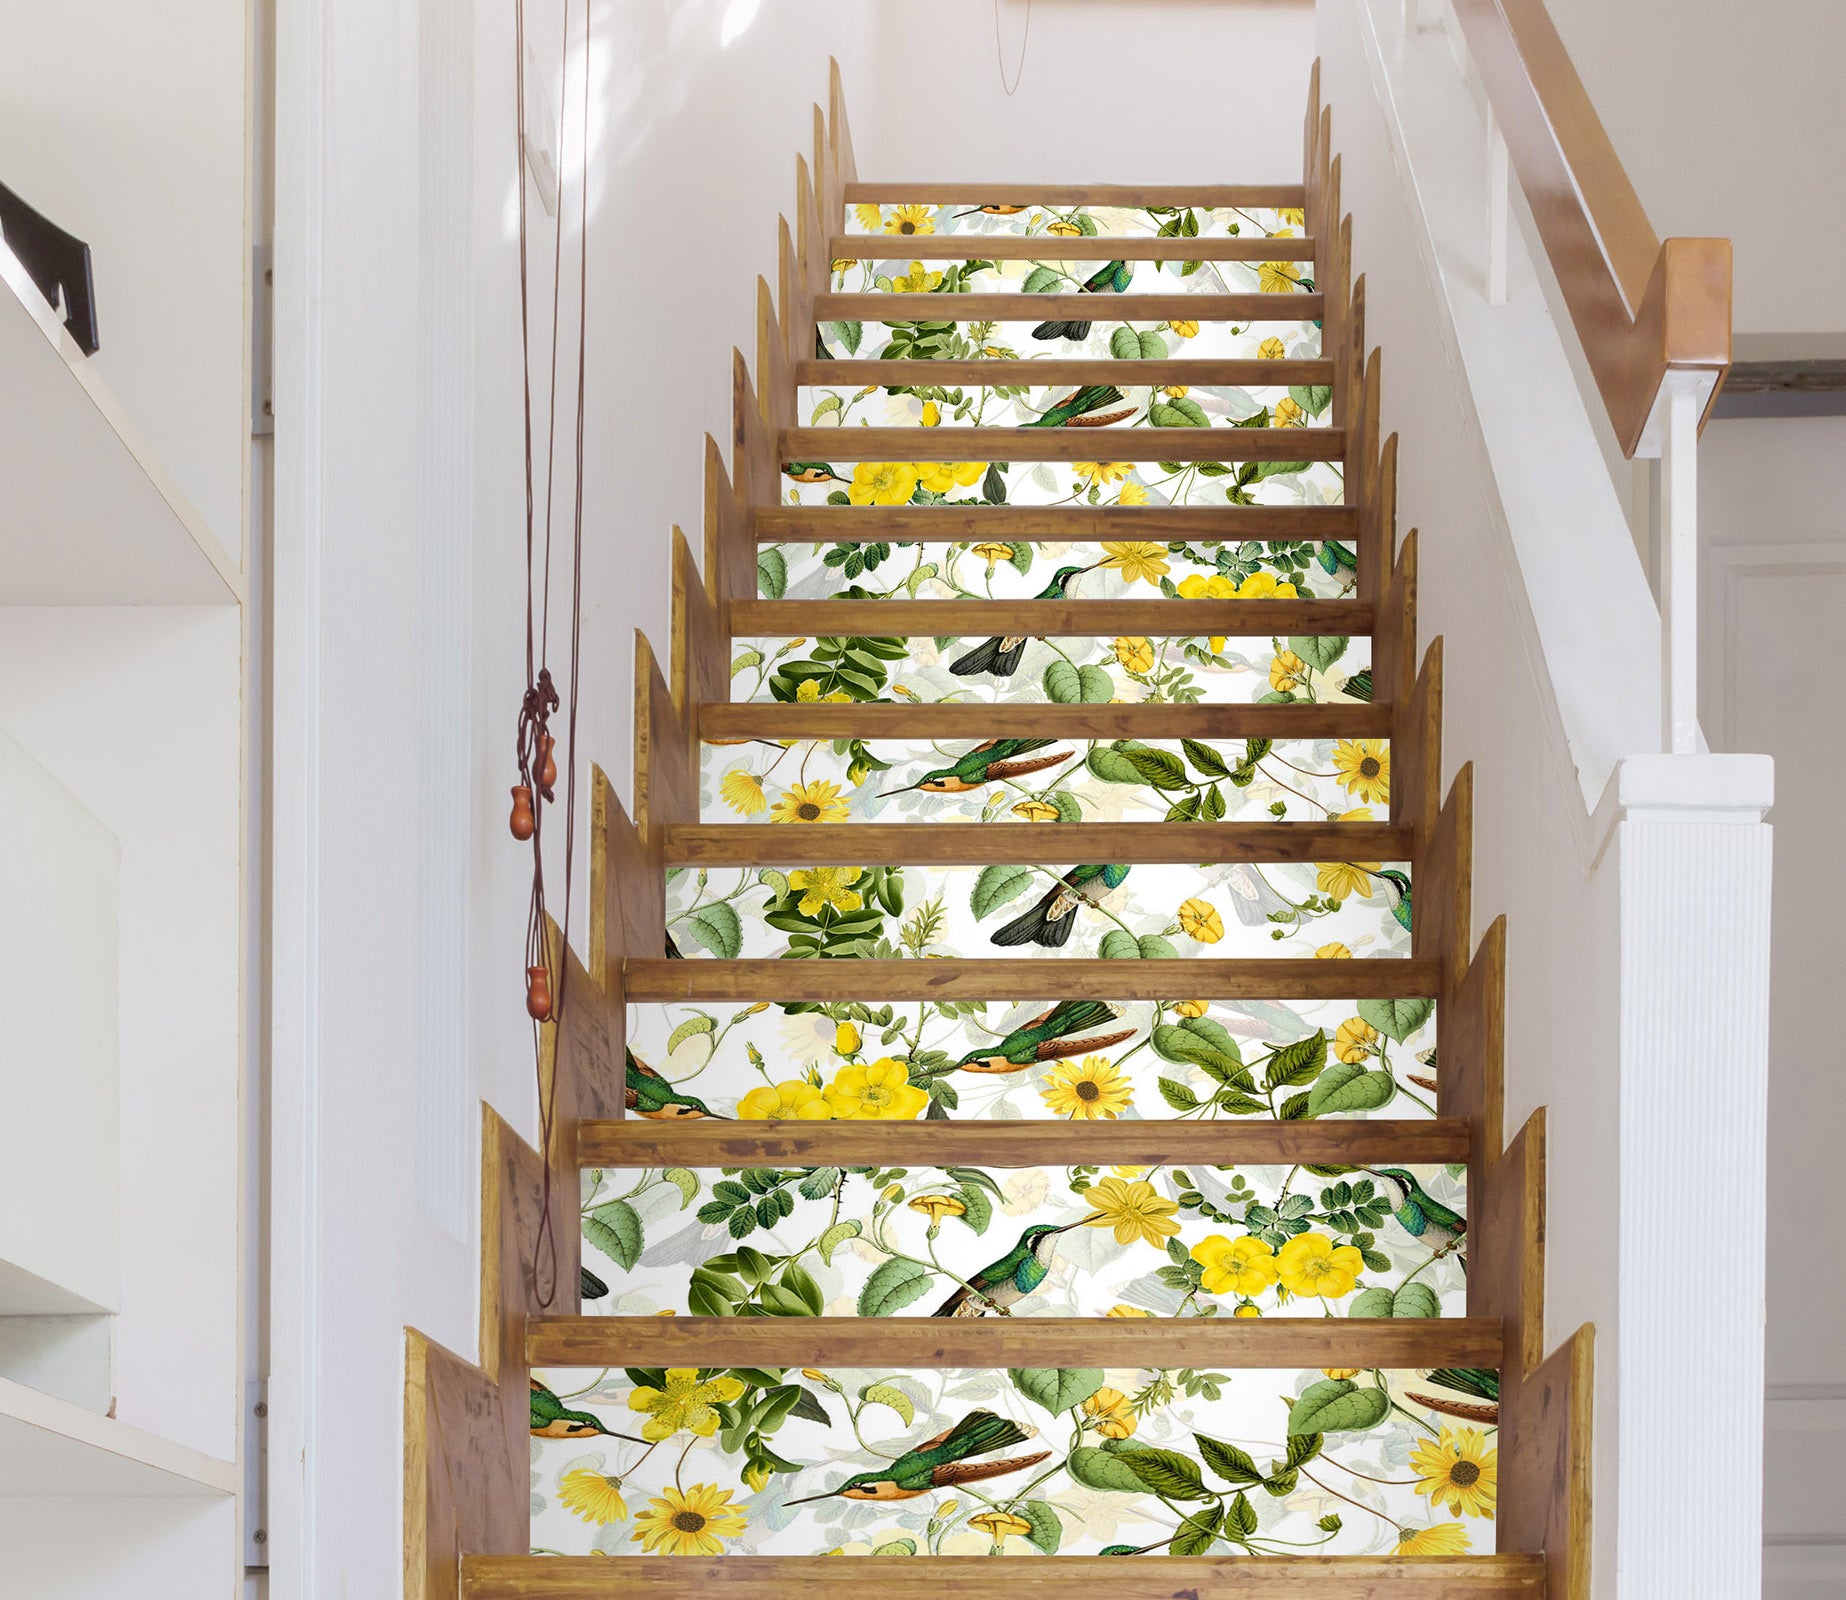 3D Yellow Flowers 10438 Uta Naumann Stair Risers